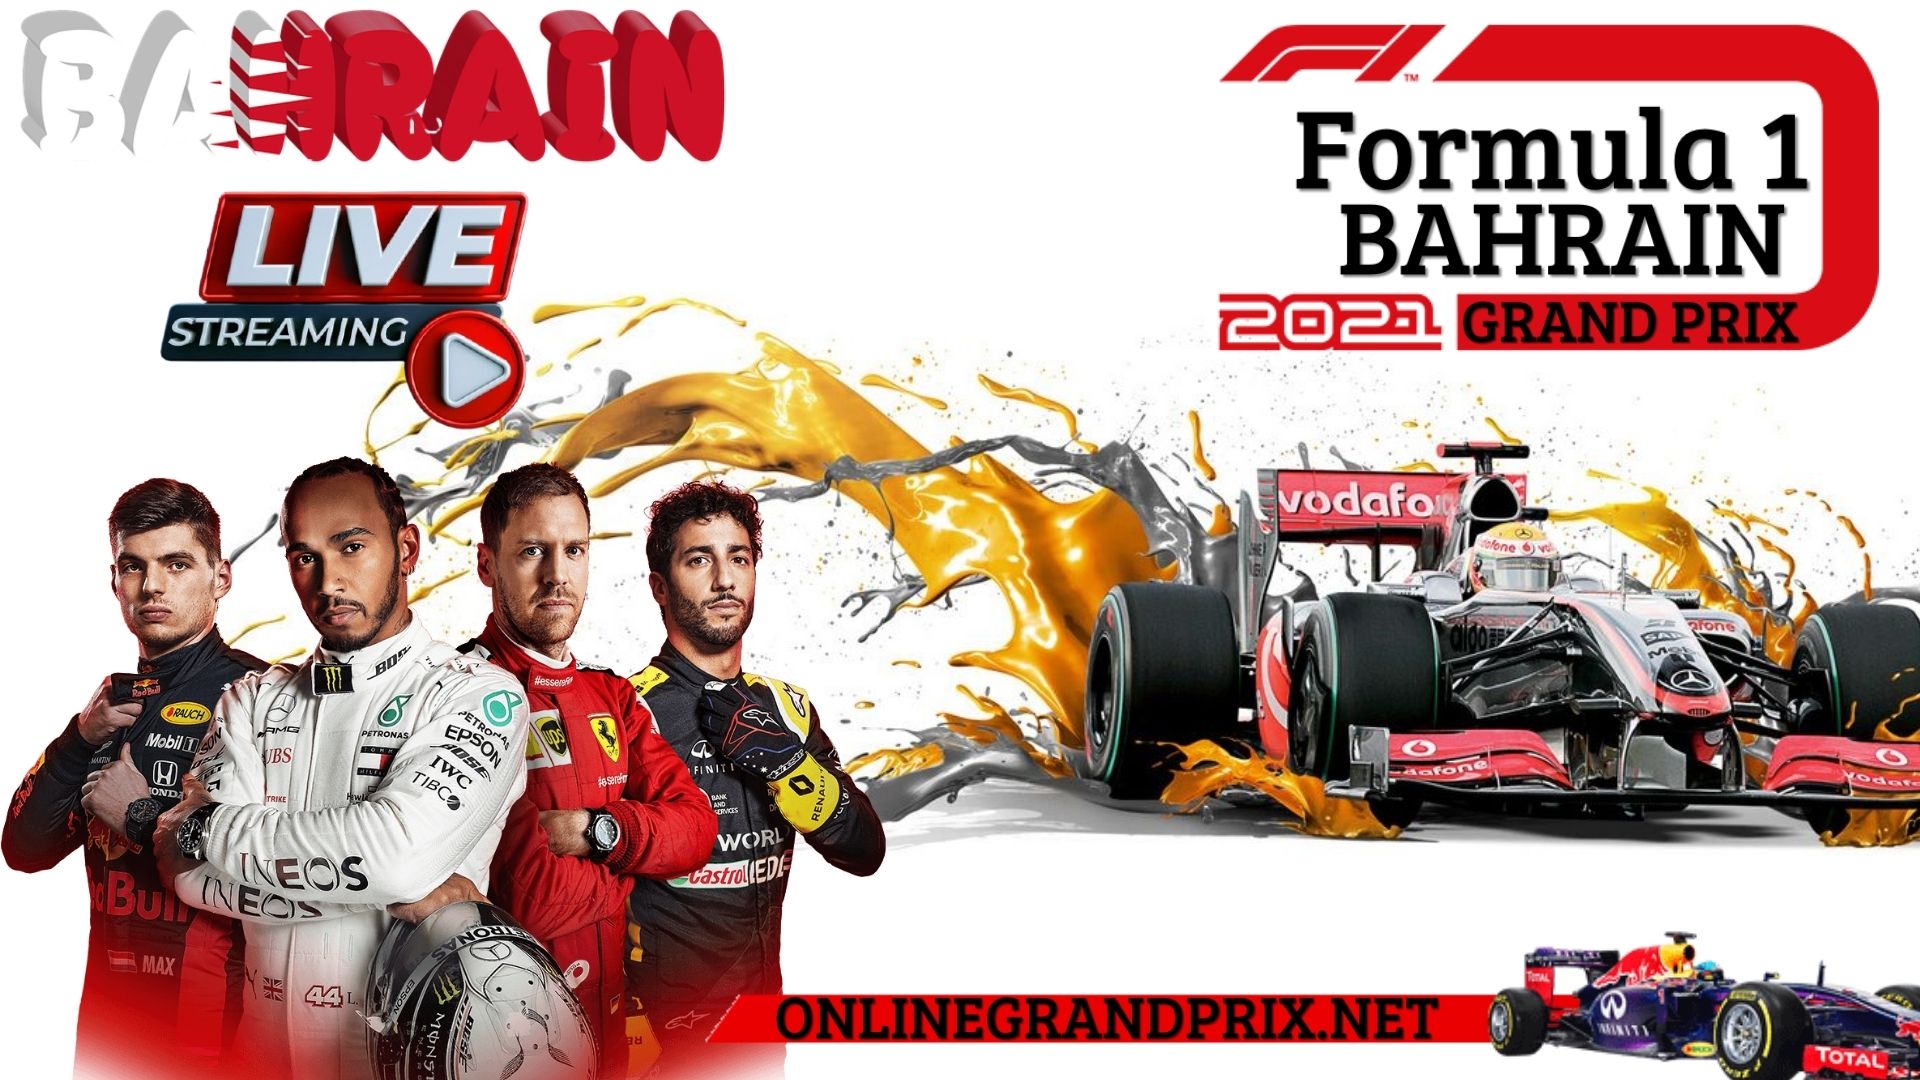 Watch FORMULA 1 Baherain Grand Prix 2016 Live